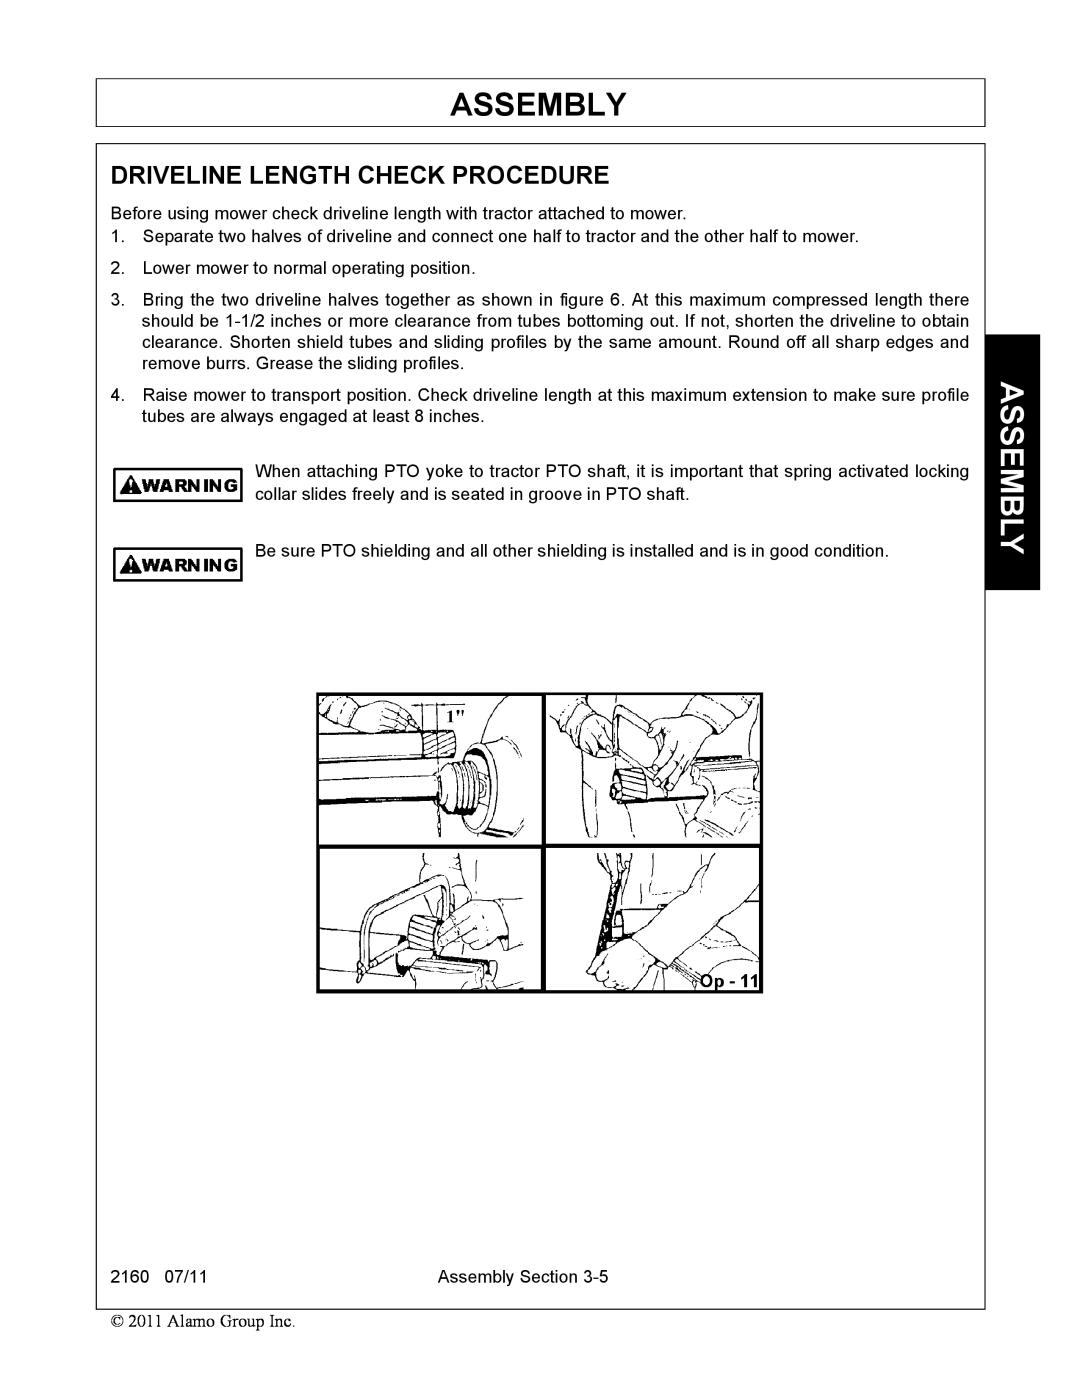 Servis-Rhino 2160 manual Driveline Length Check Procedure, Assembly 